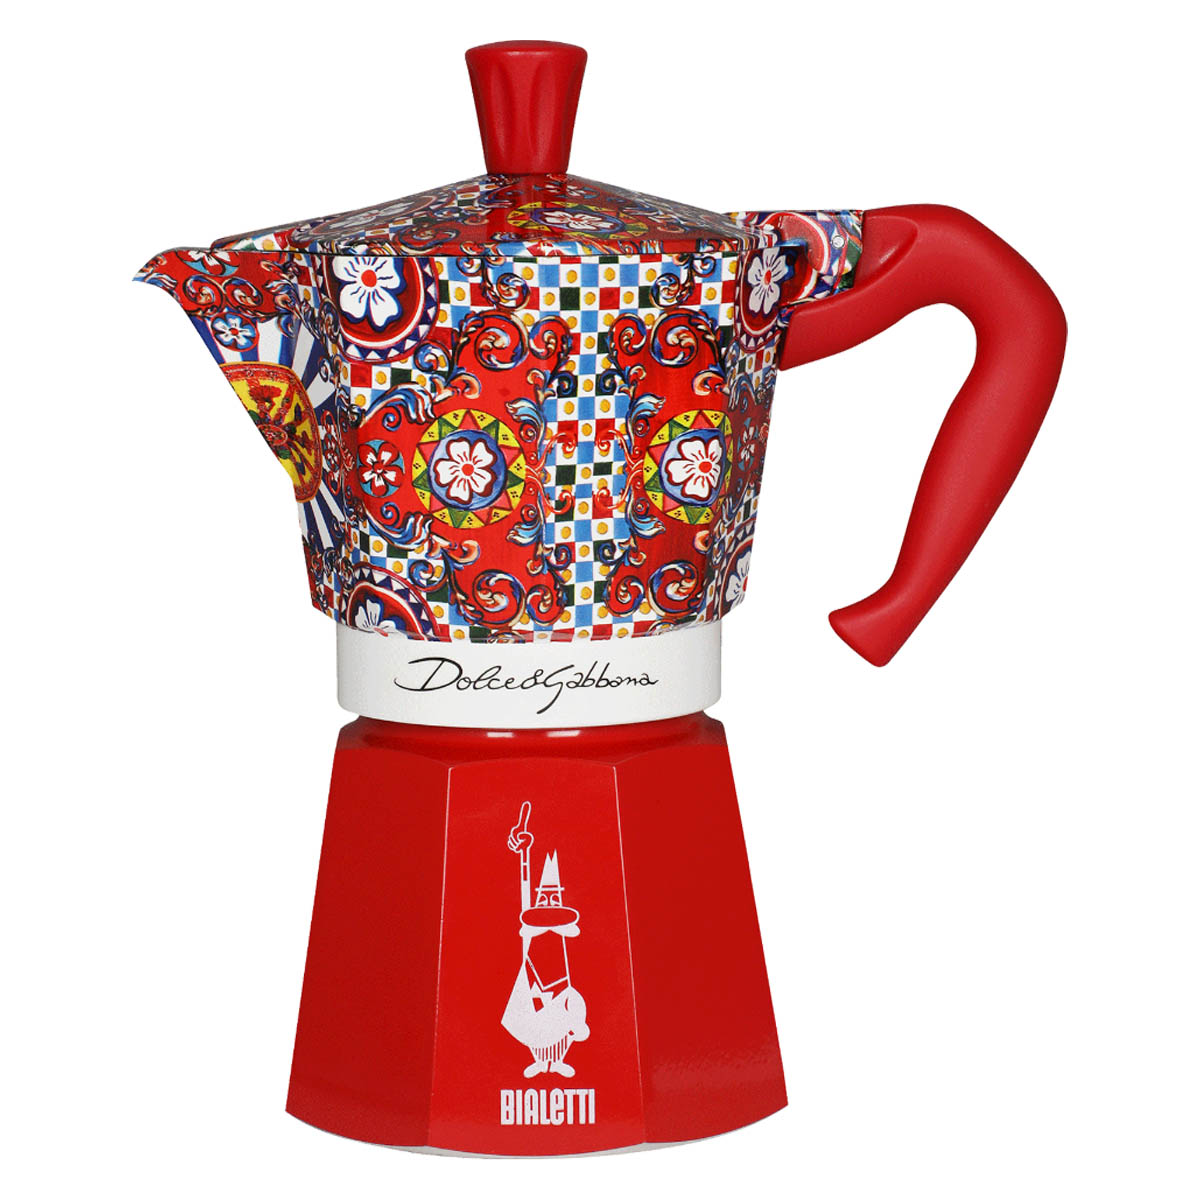 Гейзерная кофеварка Bialetti Dolce&Gabbana на 6 порций Bialetti 5221_6007, цвет красный - фото 1